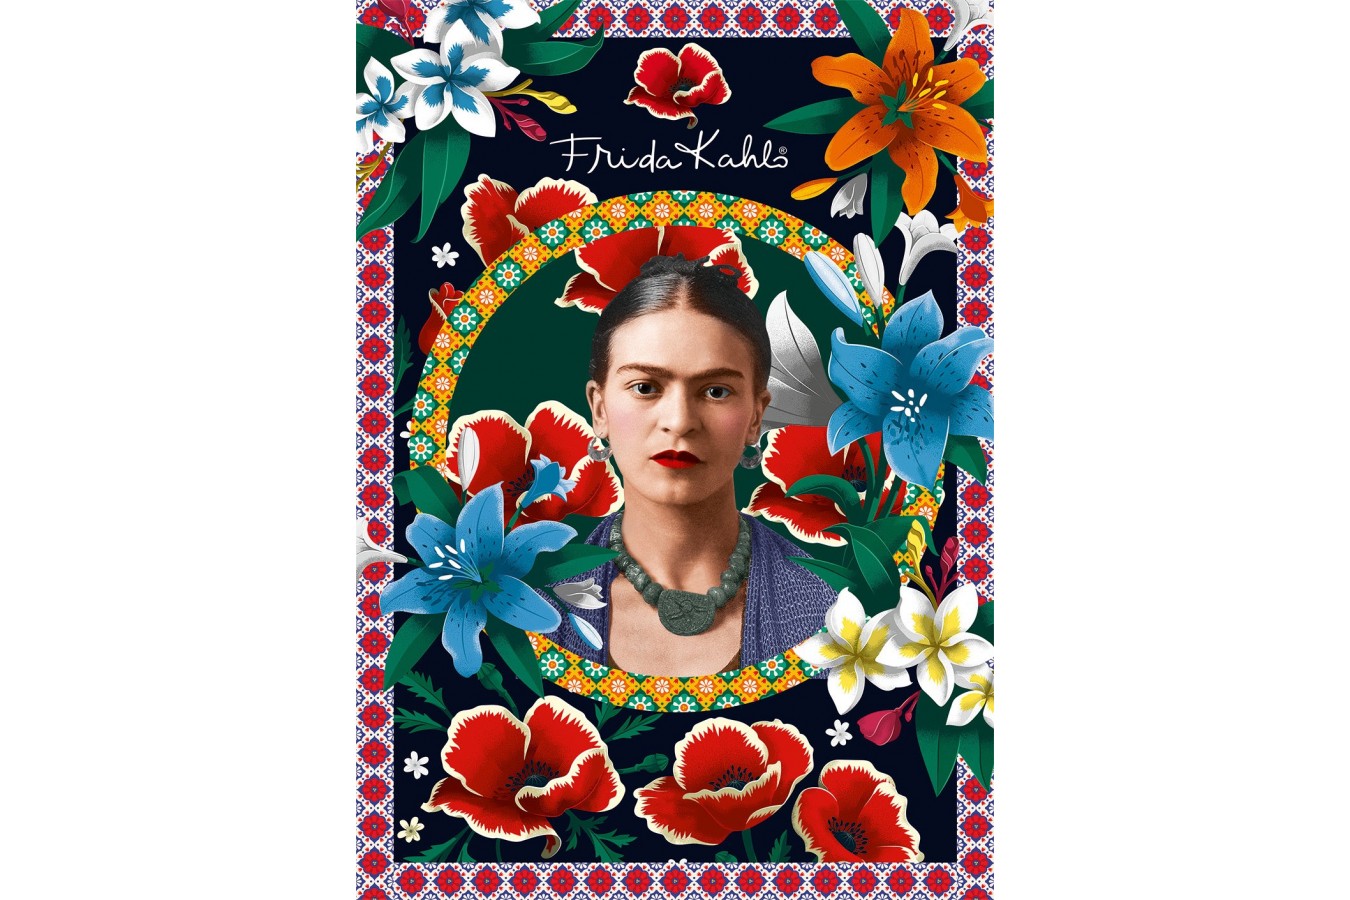 Puzzle 2000 piese - Frida Kahlo (Bluebird-Puzzle-70492)